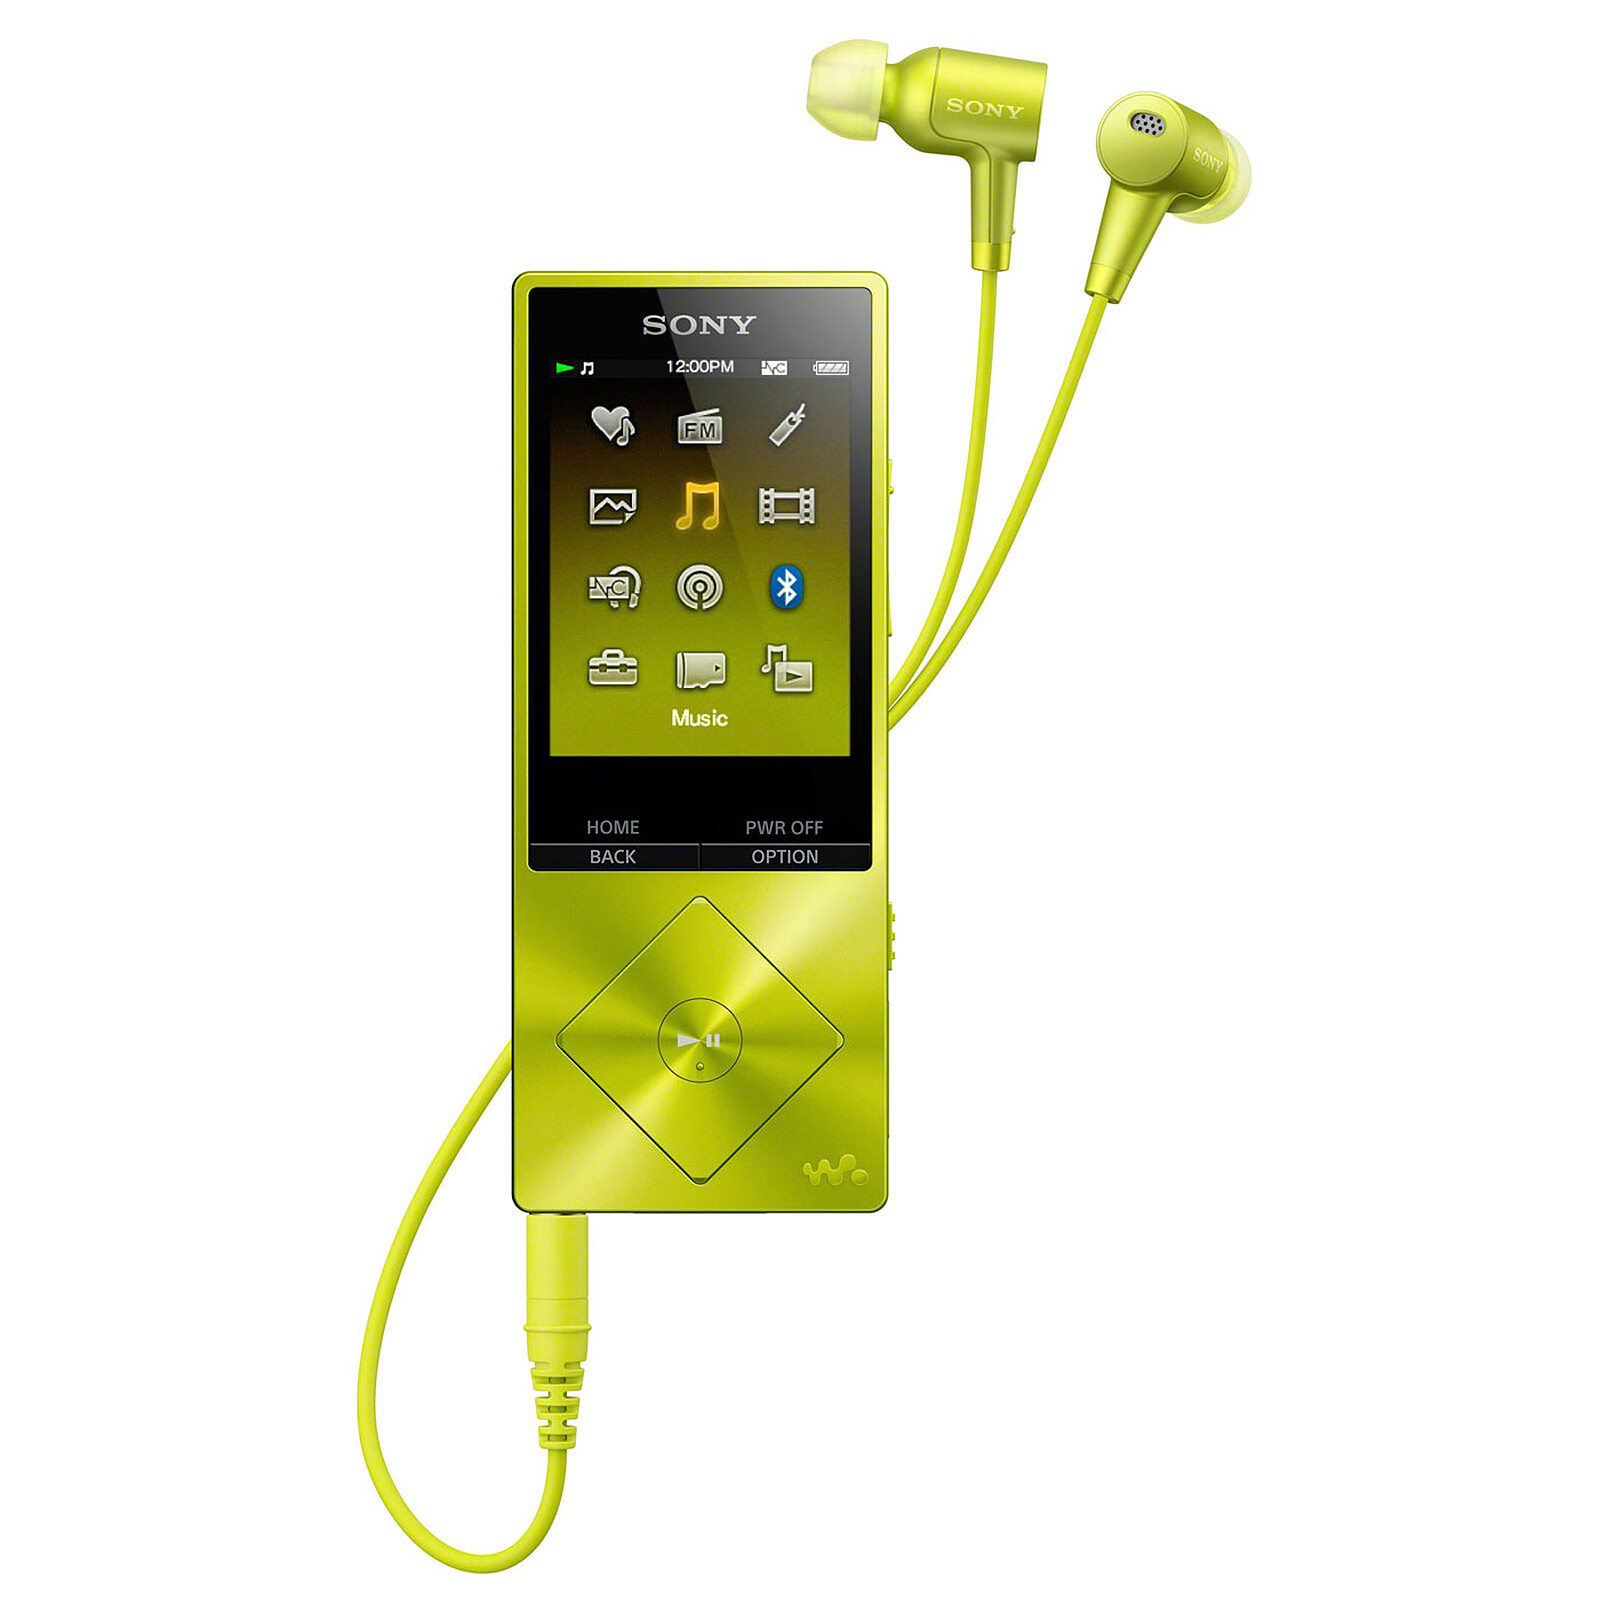 Sony NW-A25HN Jaune - Lecteur MP3 & iPod - Garantie 3 ans LDLC